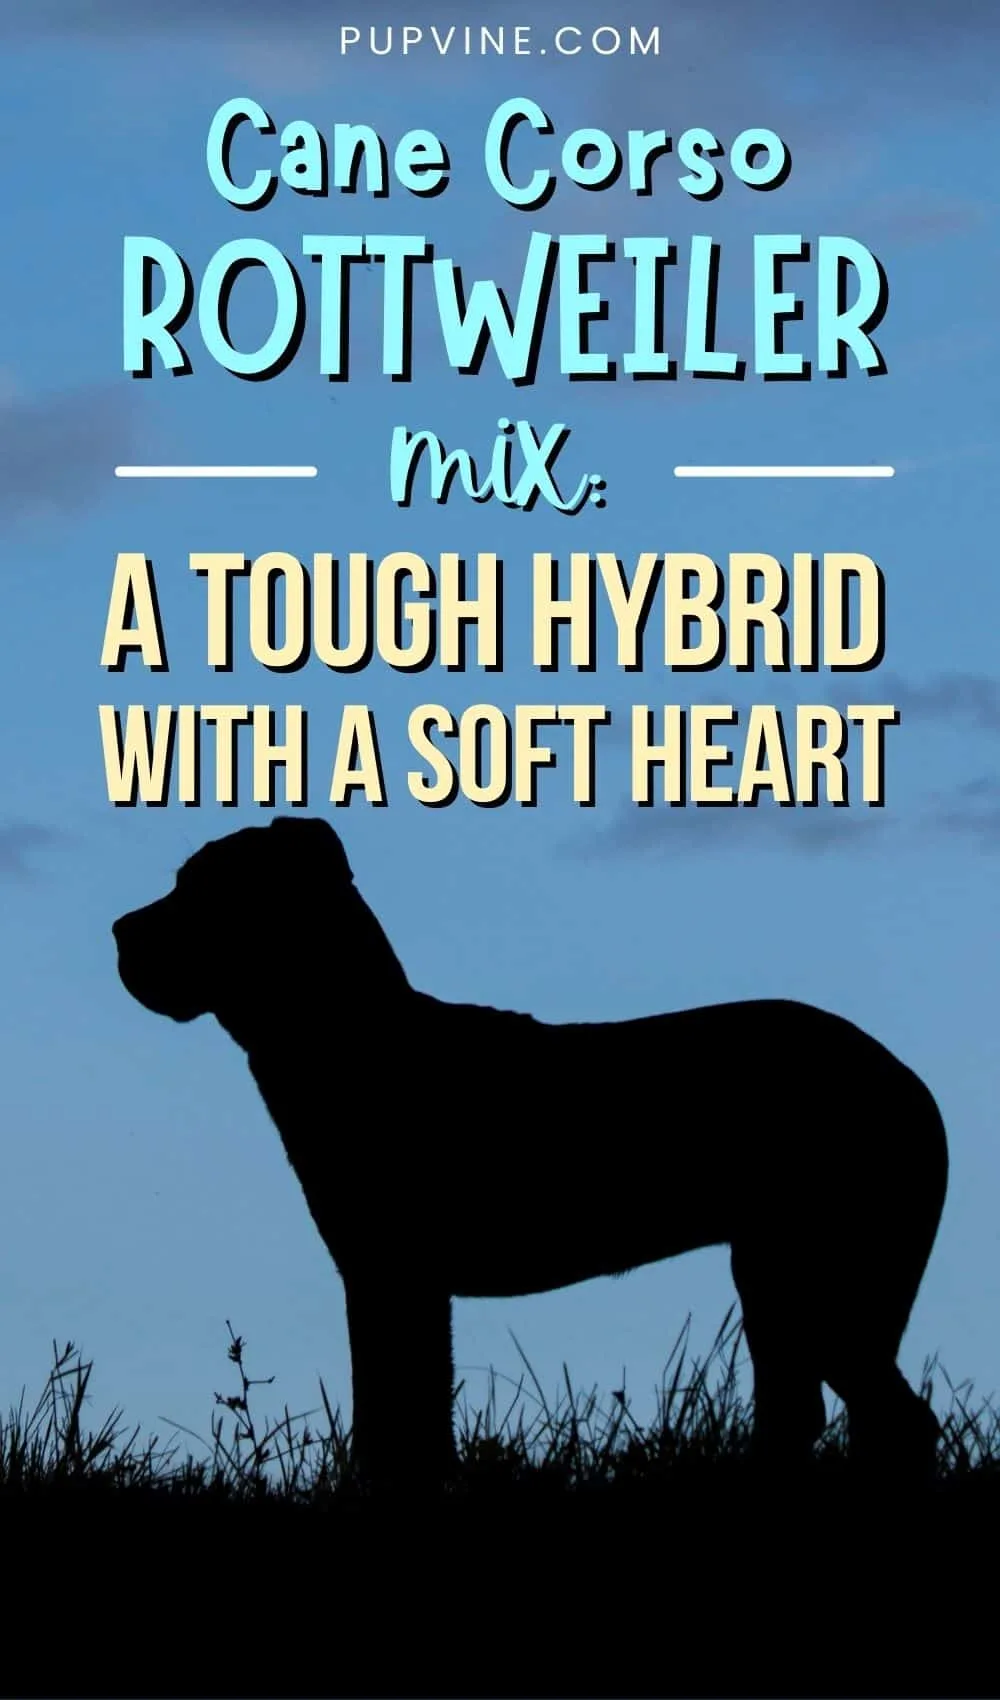 Cane Corso Rottweiler Mix A Tough Hybrid With A Soft Heart